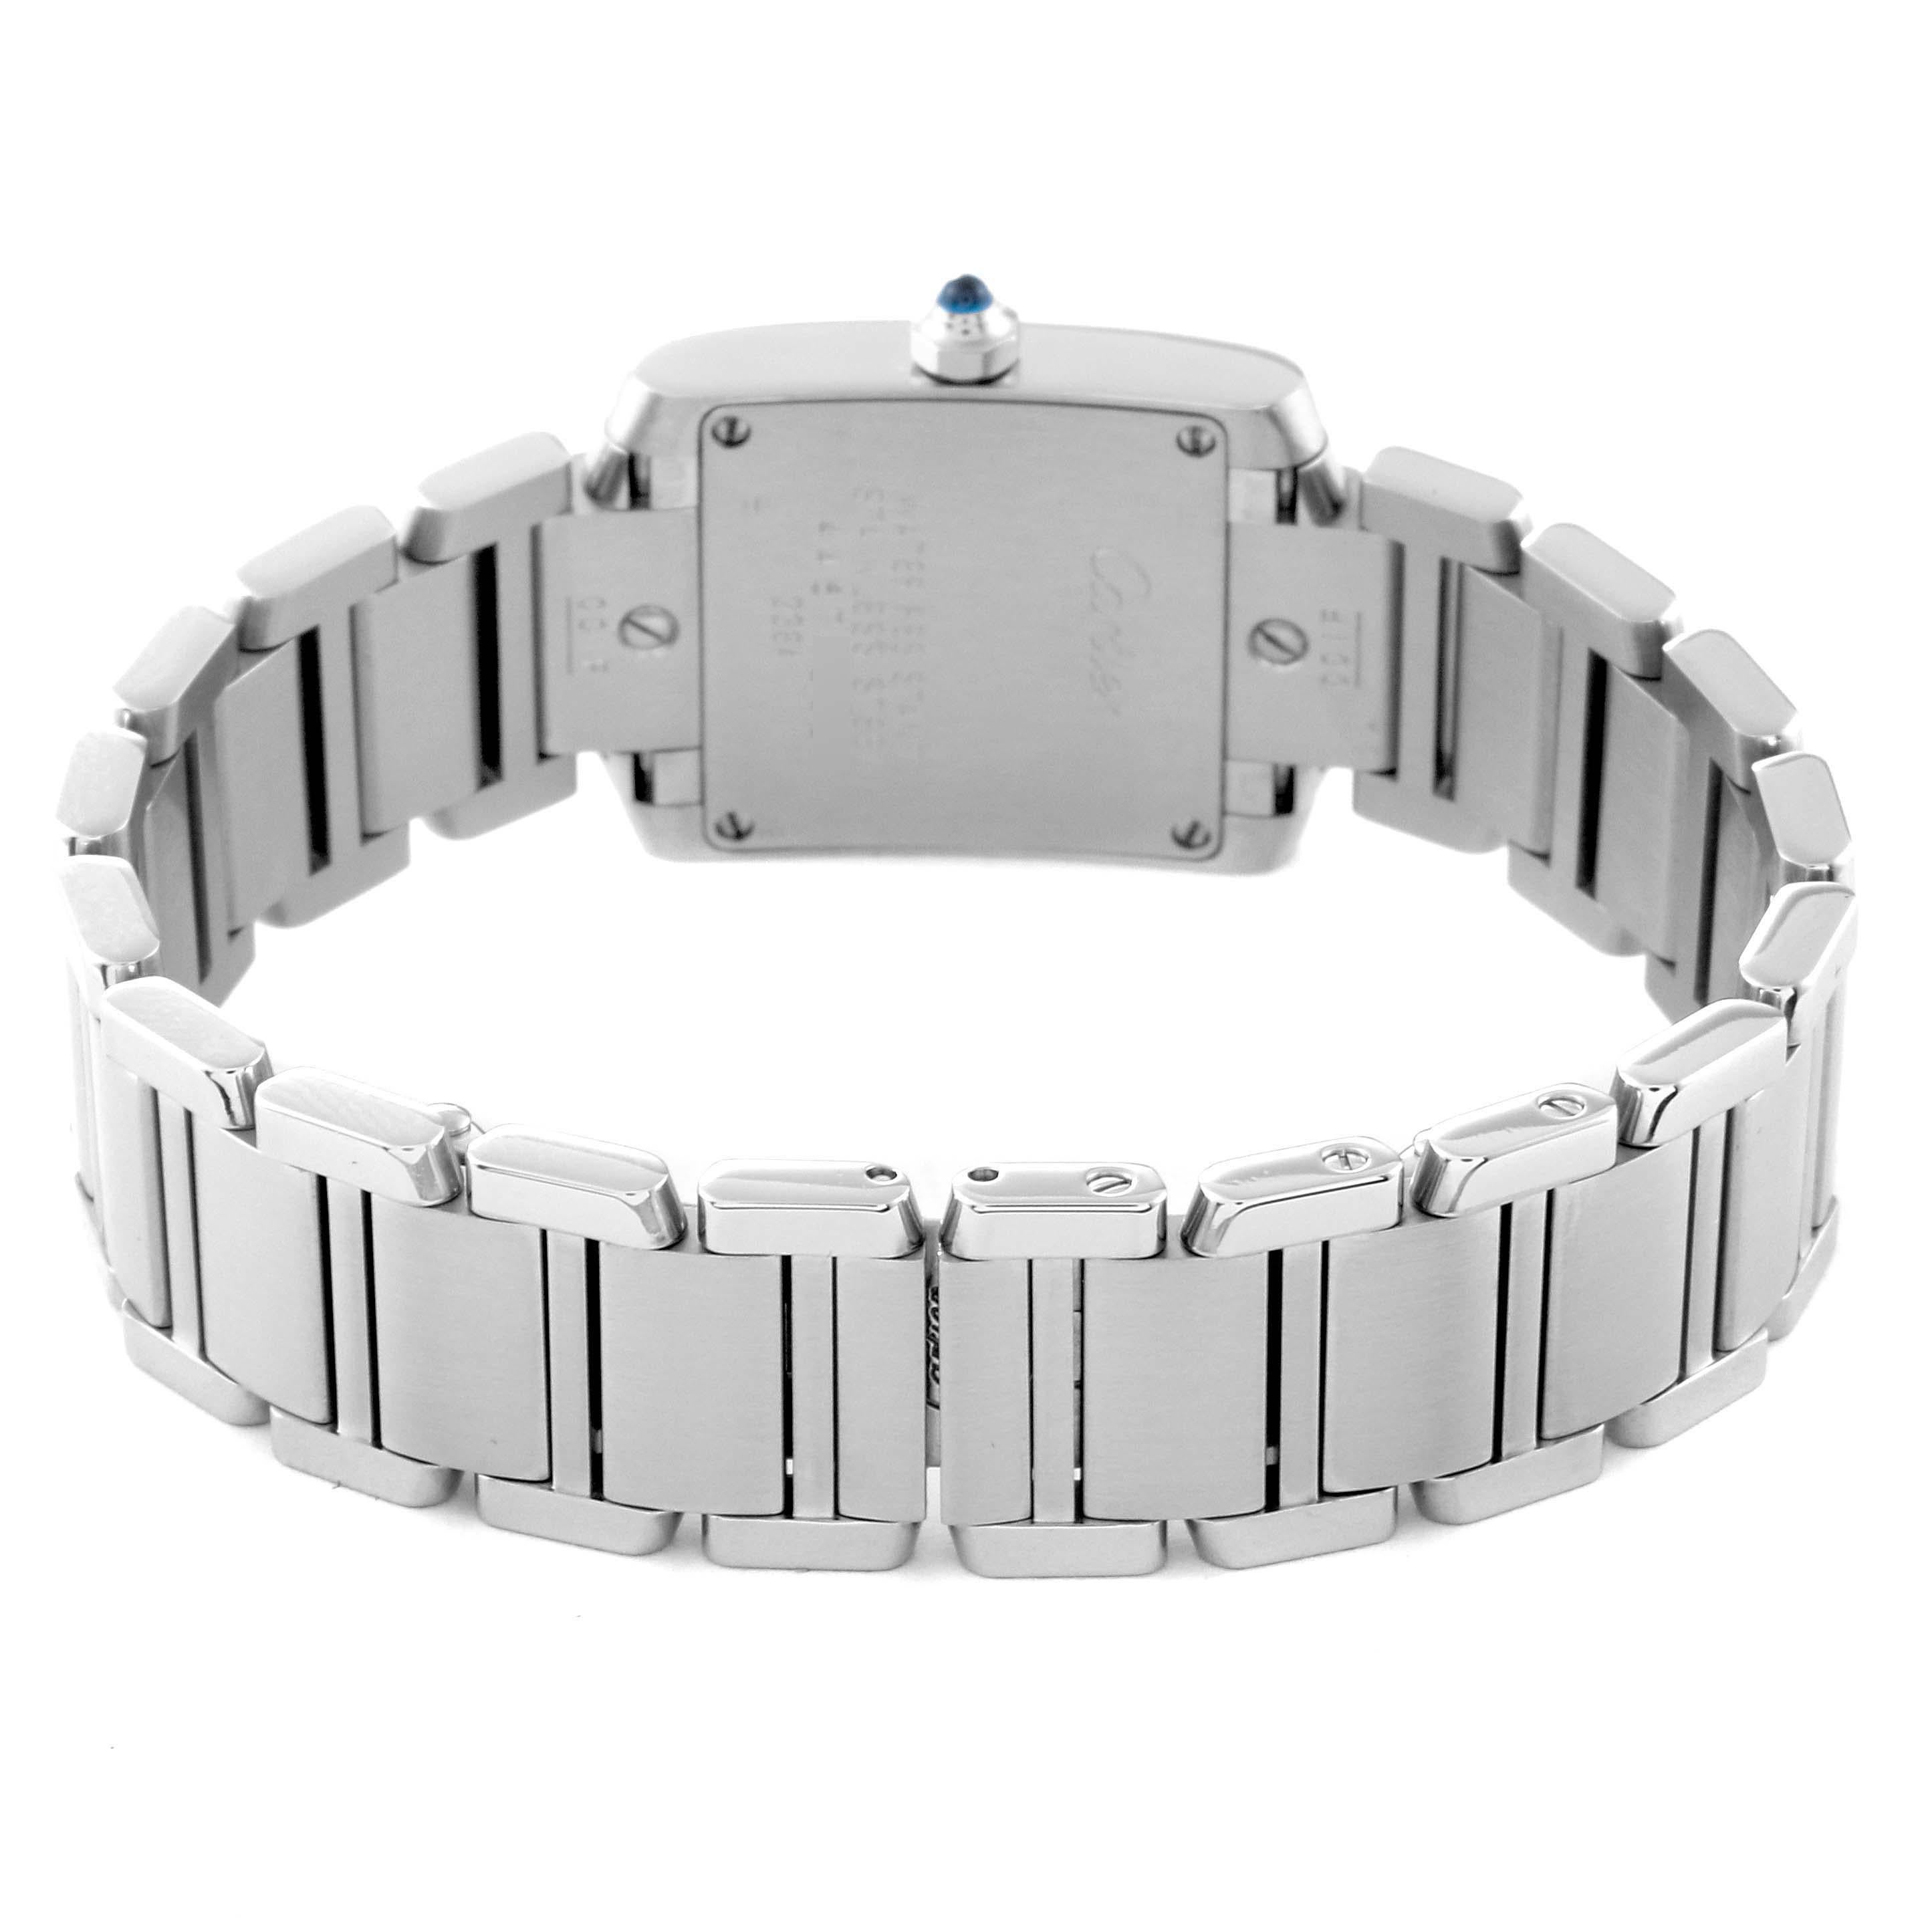 Cartier Tank Francaise Black Dial Steel Ladies Watch W51026Q3 For Sale 2